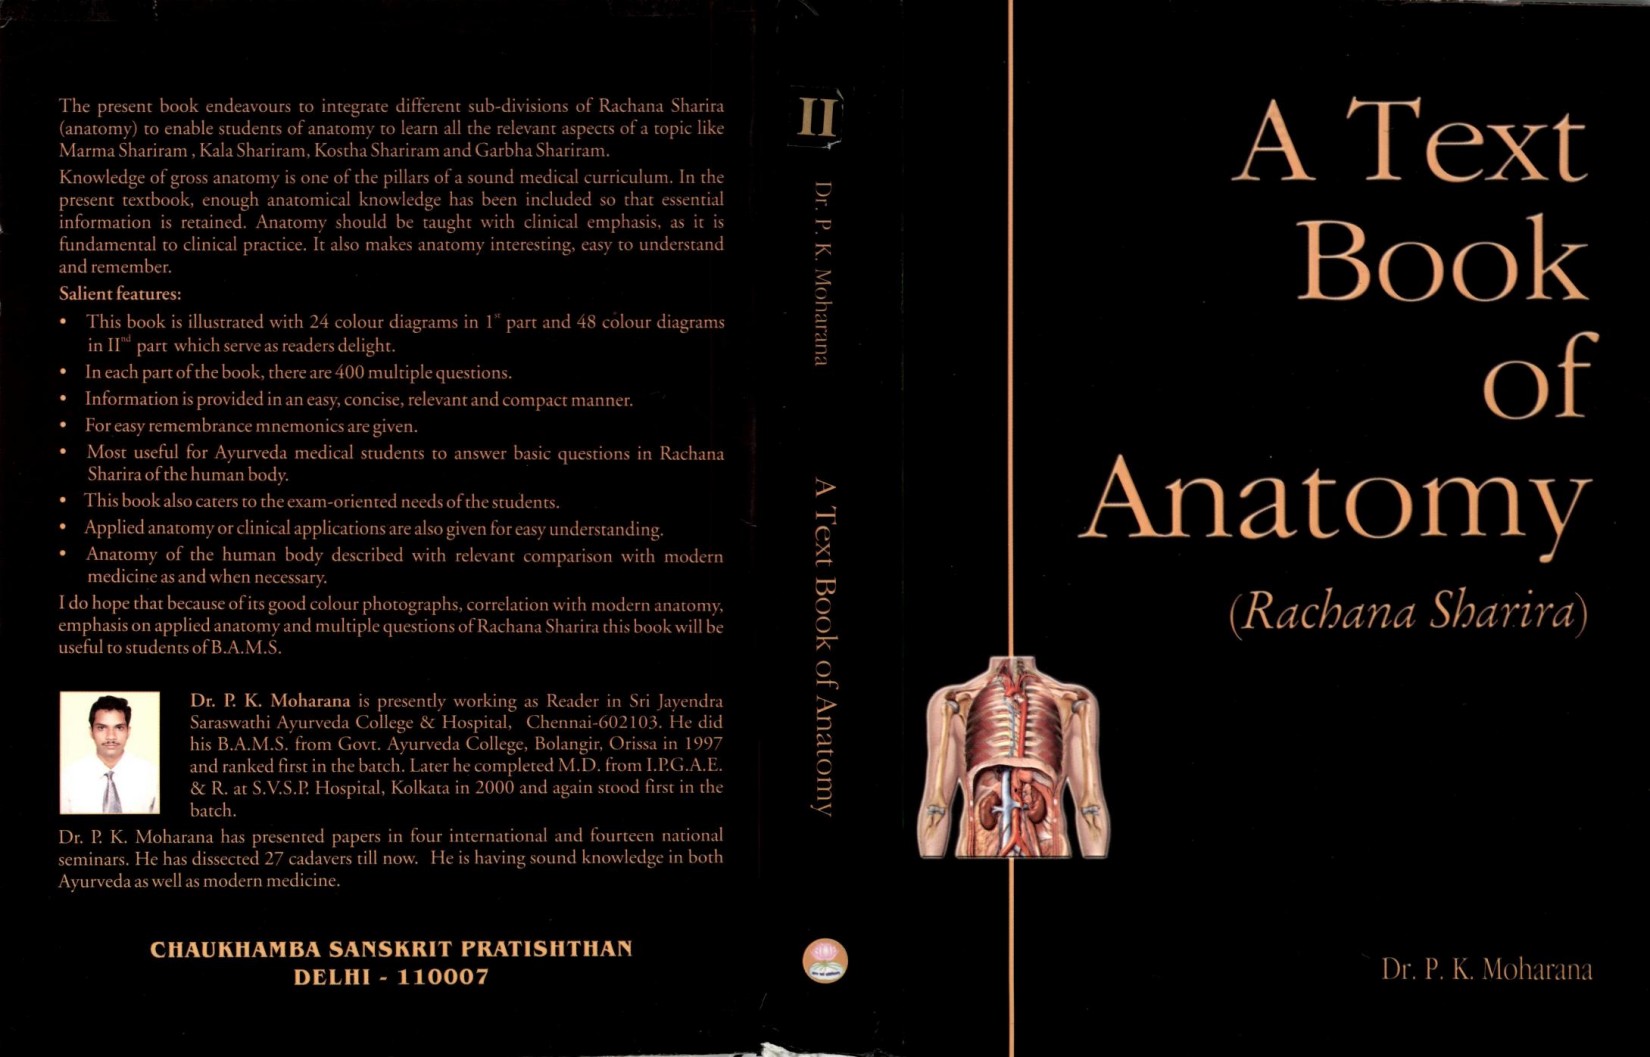 A Text Book of Anatomy ( Rachana Sharira).pdf